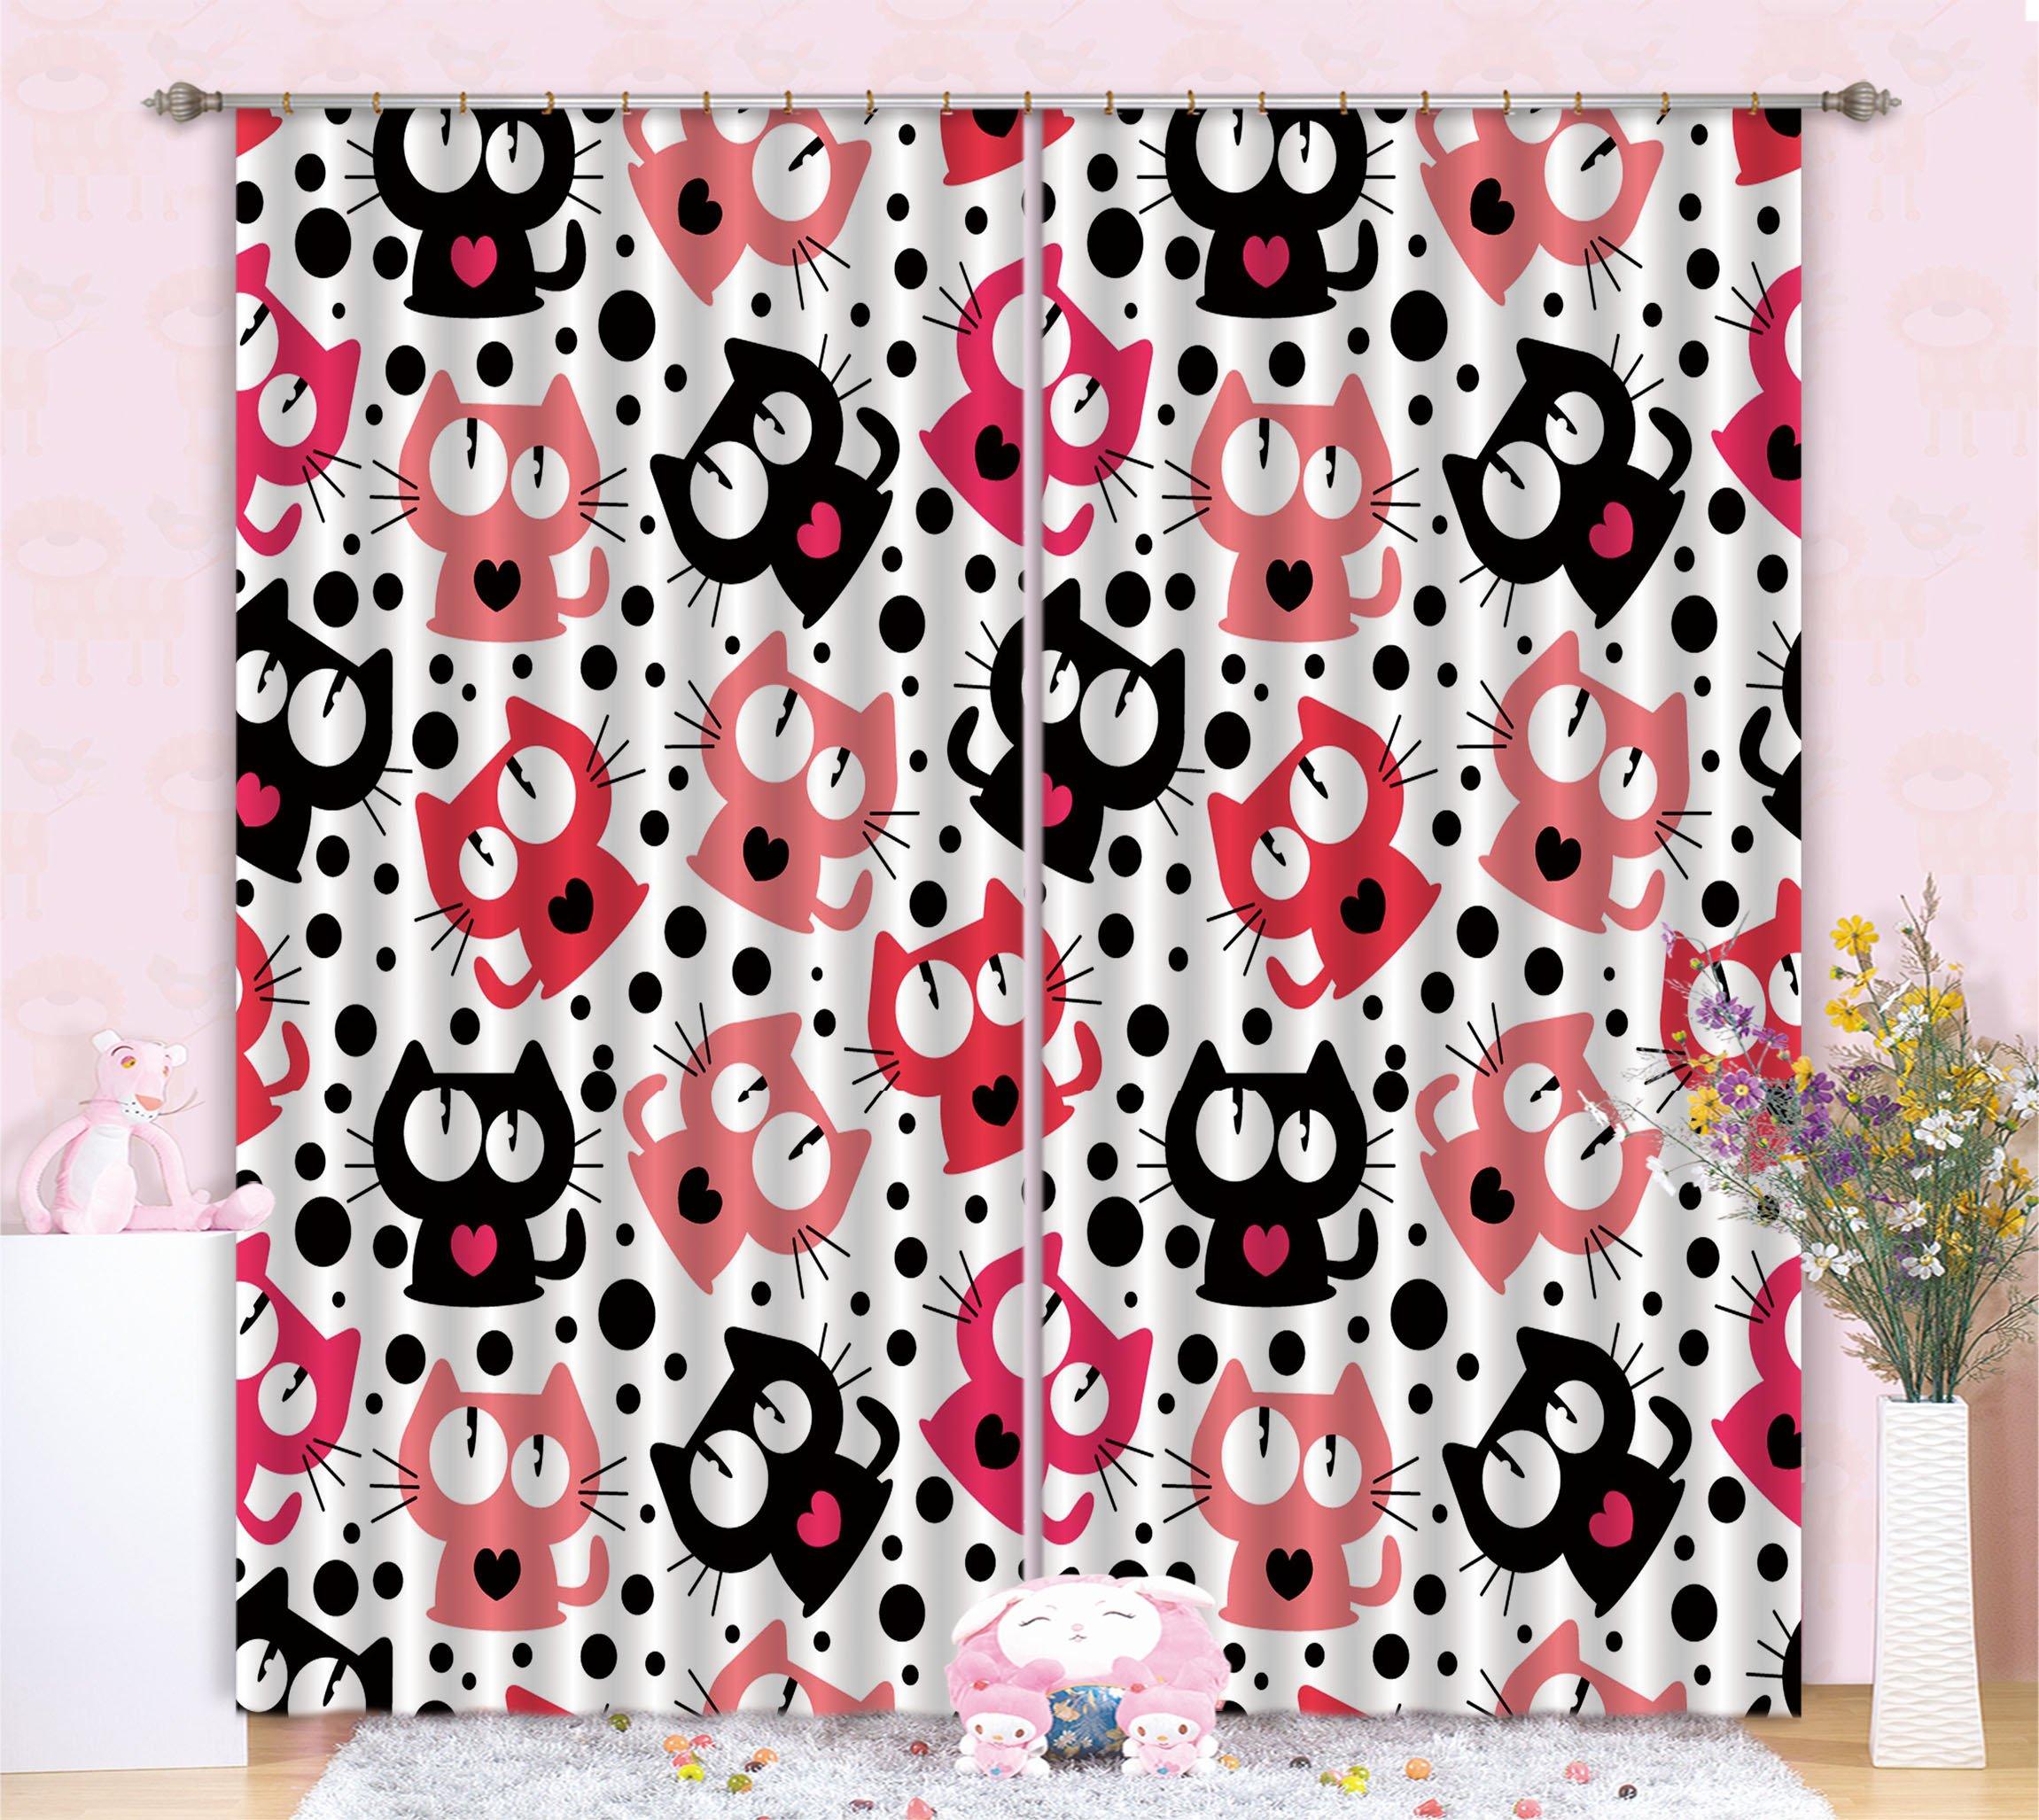 3D Lovely Cats Pattern 2347 Curtains Drapes Wallpaper AJ Wallpaper 